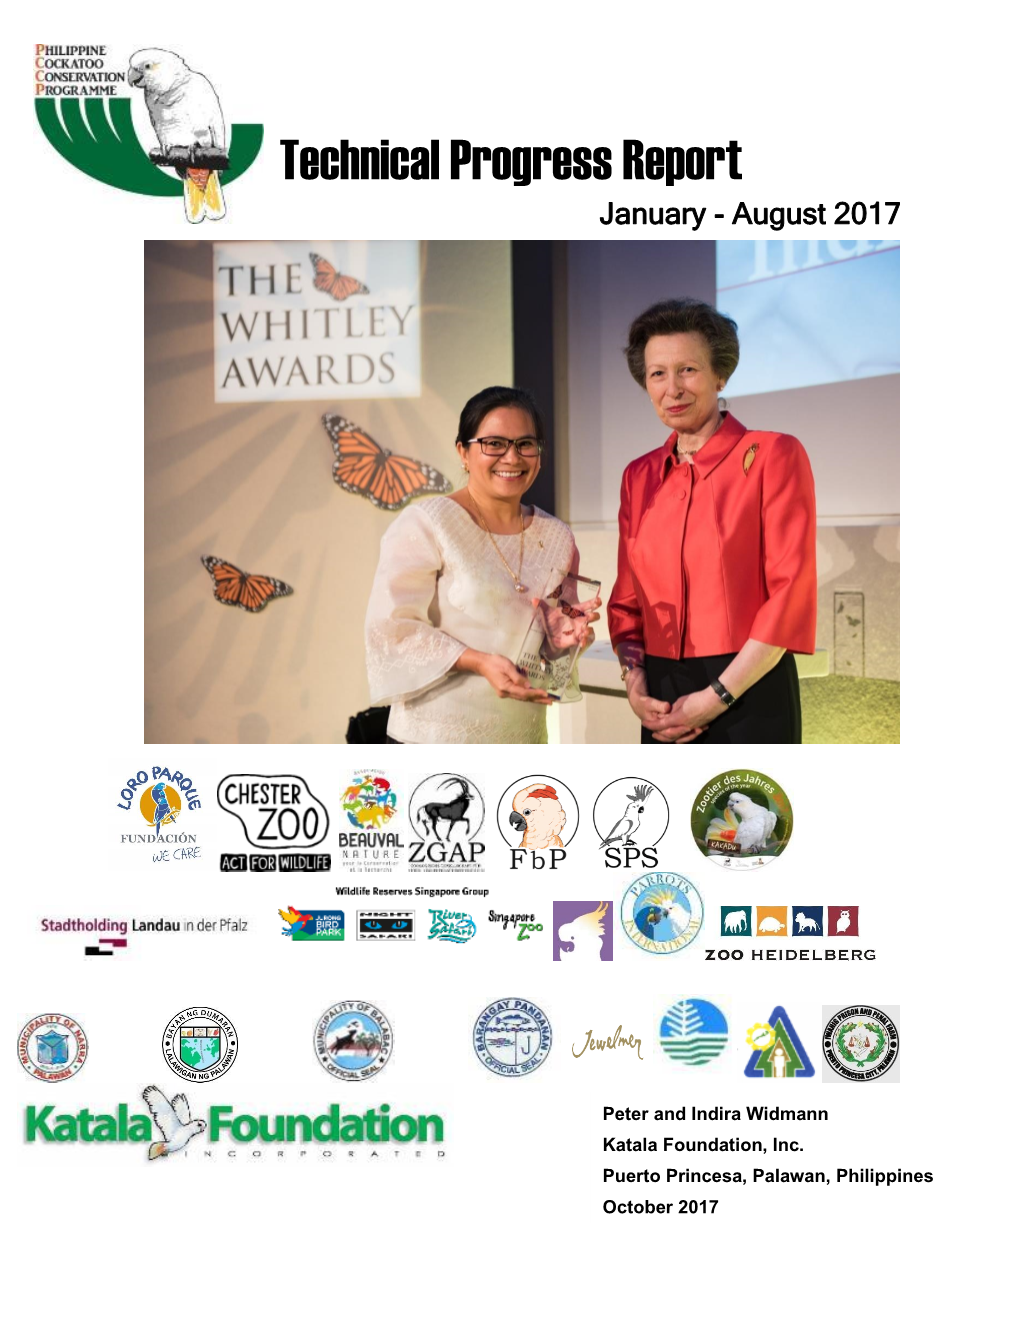 PCCP Technical Progress Report January to August 2017 Katala Foundation Inc